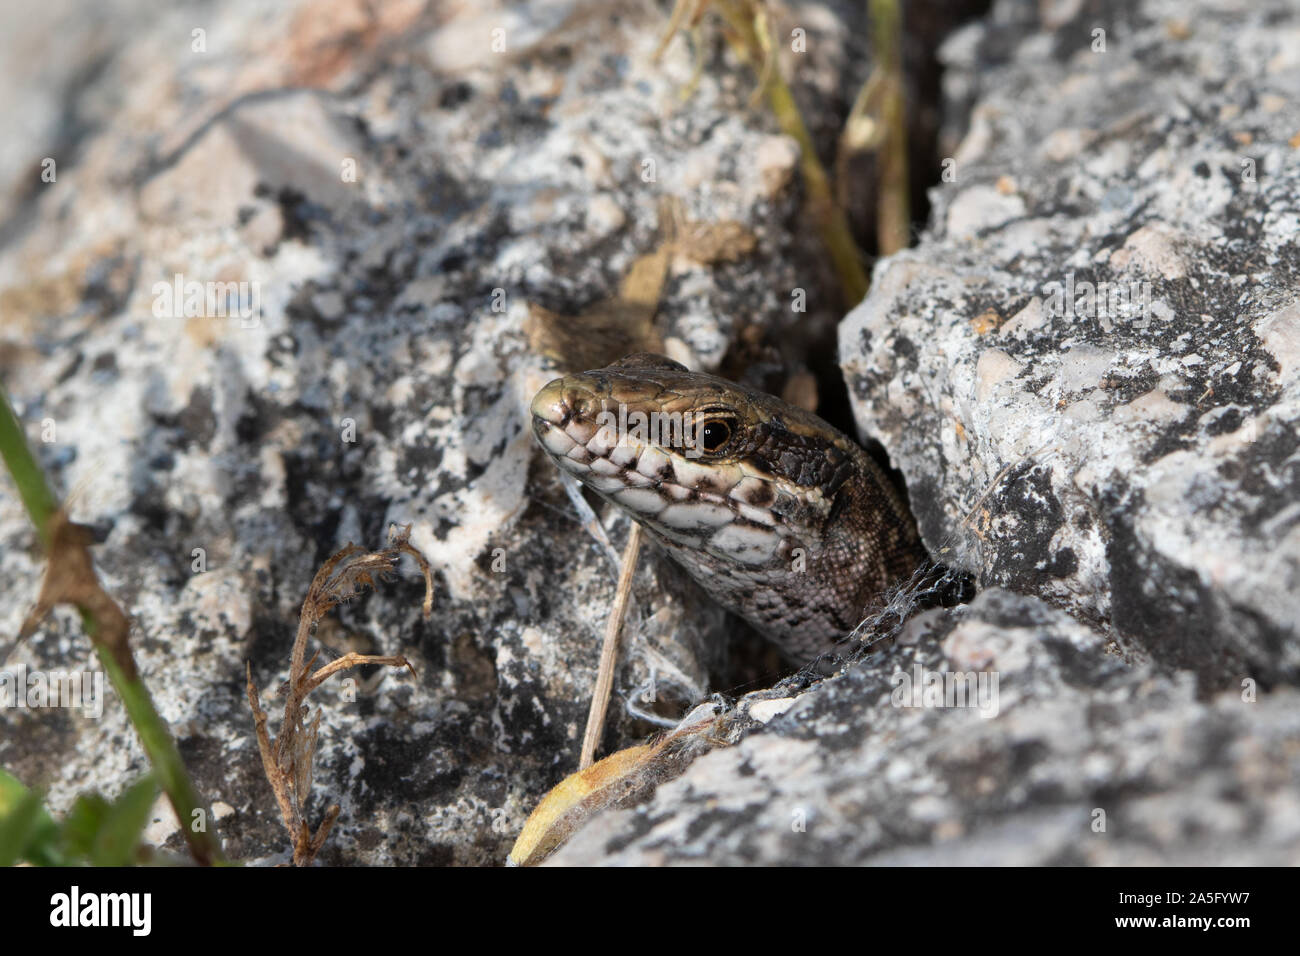 Comunes de lagartija (Podarcis muralis) cautelosamente saliendo de una grieta de roca Foto de stock